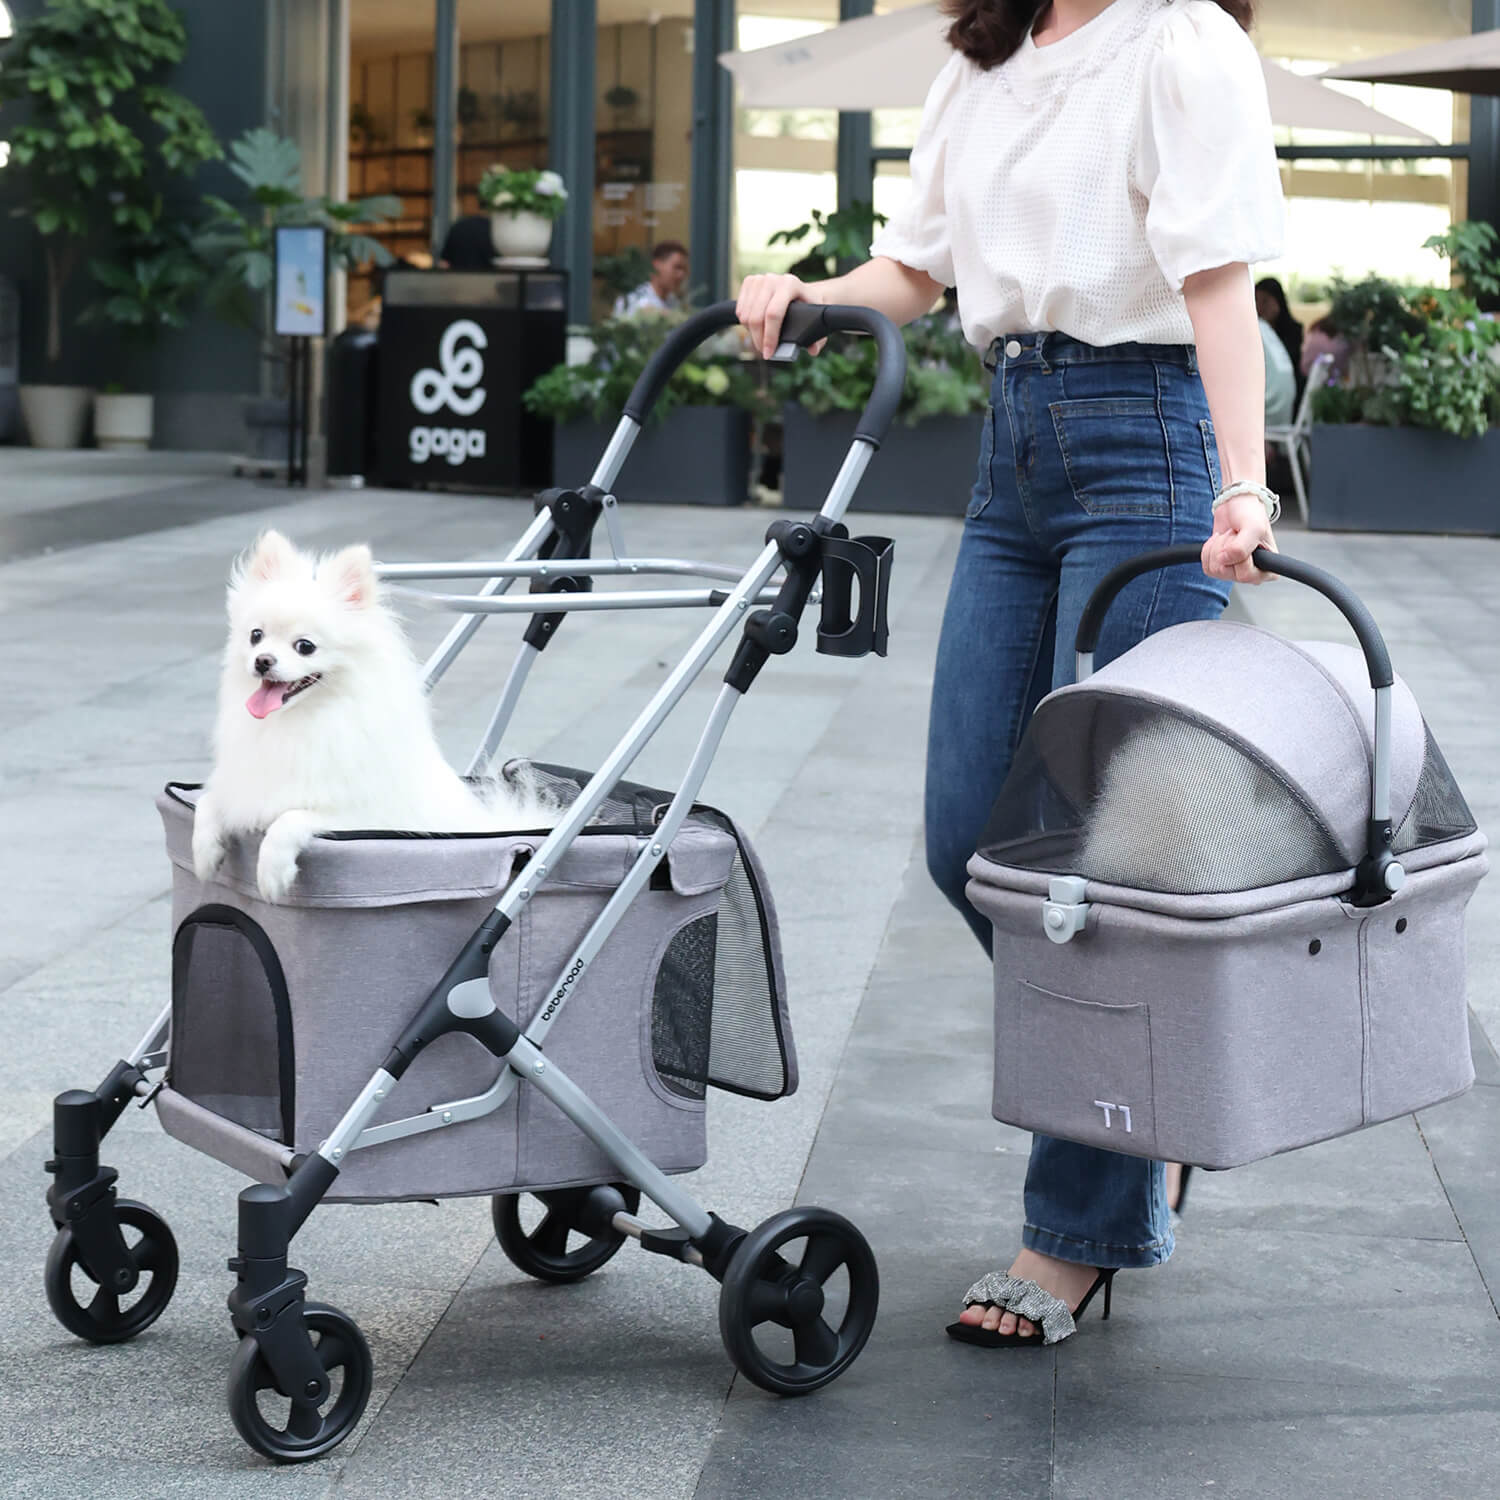 T1 Double Pet Stroller - Outlet Deal Item